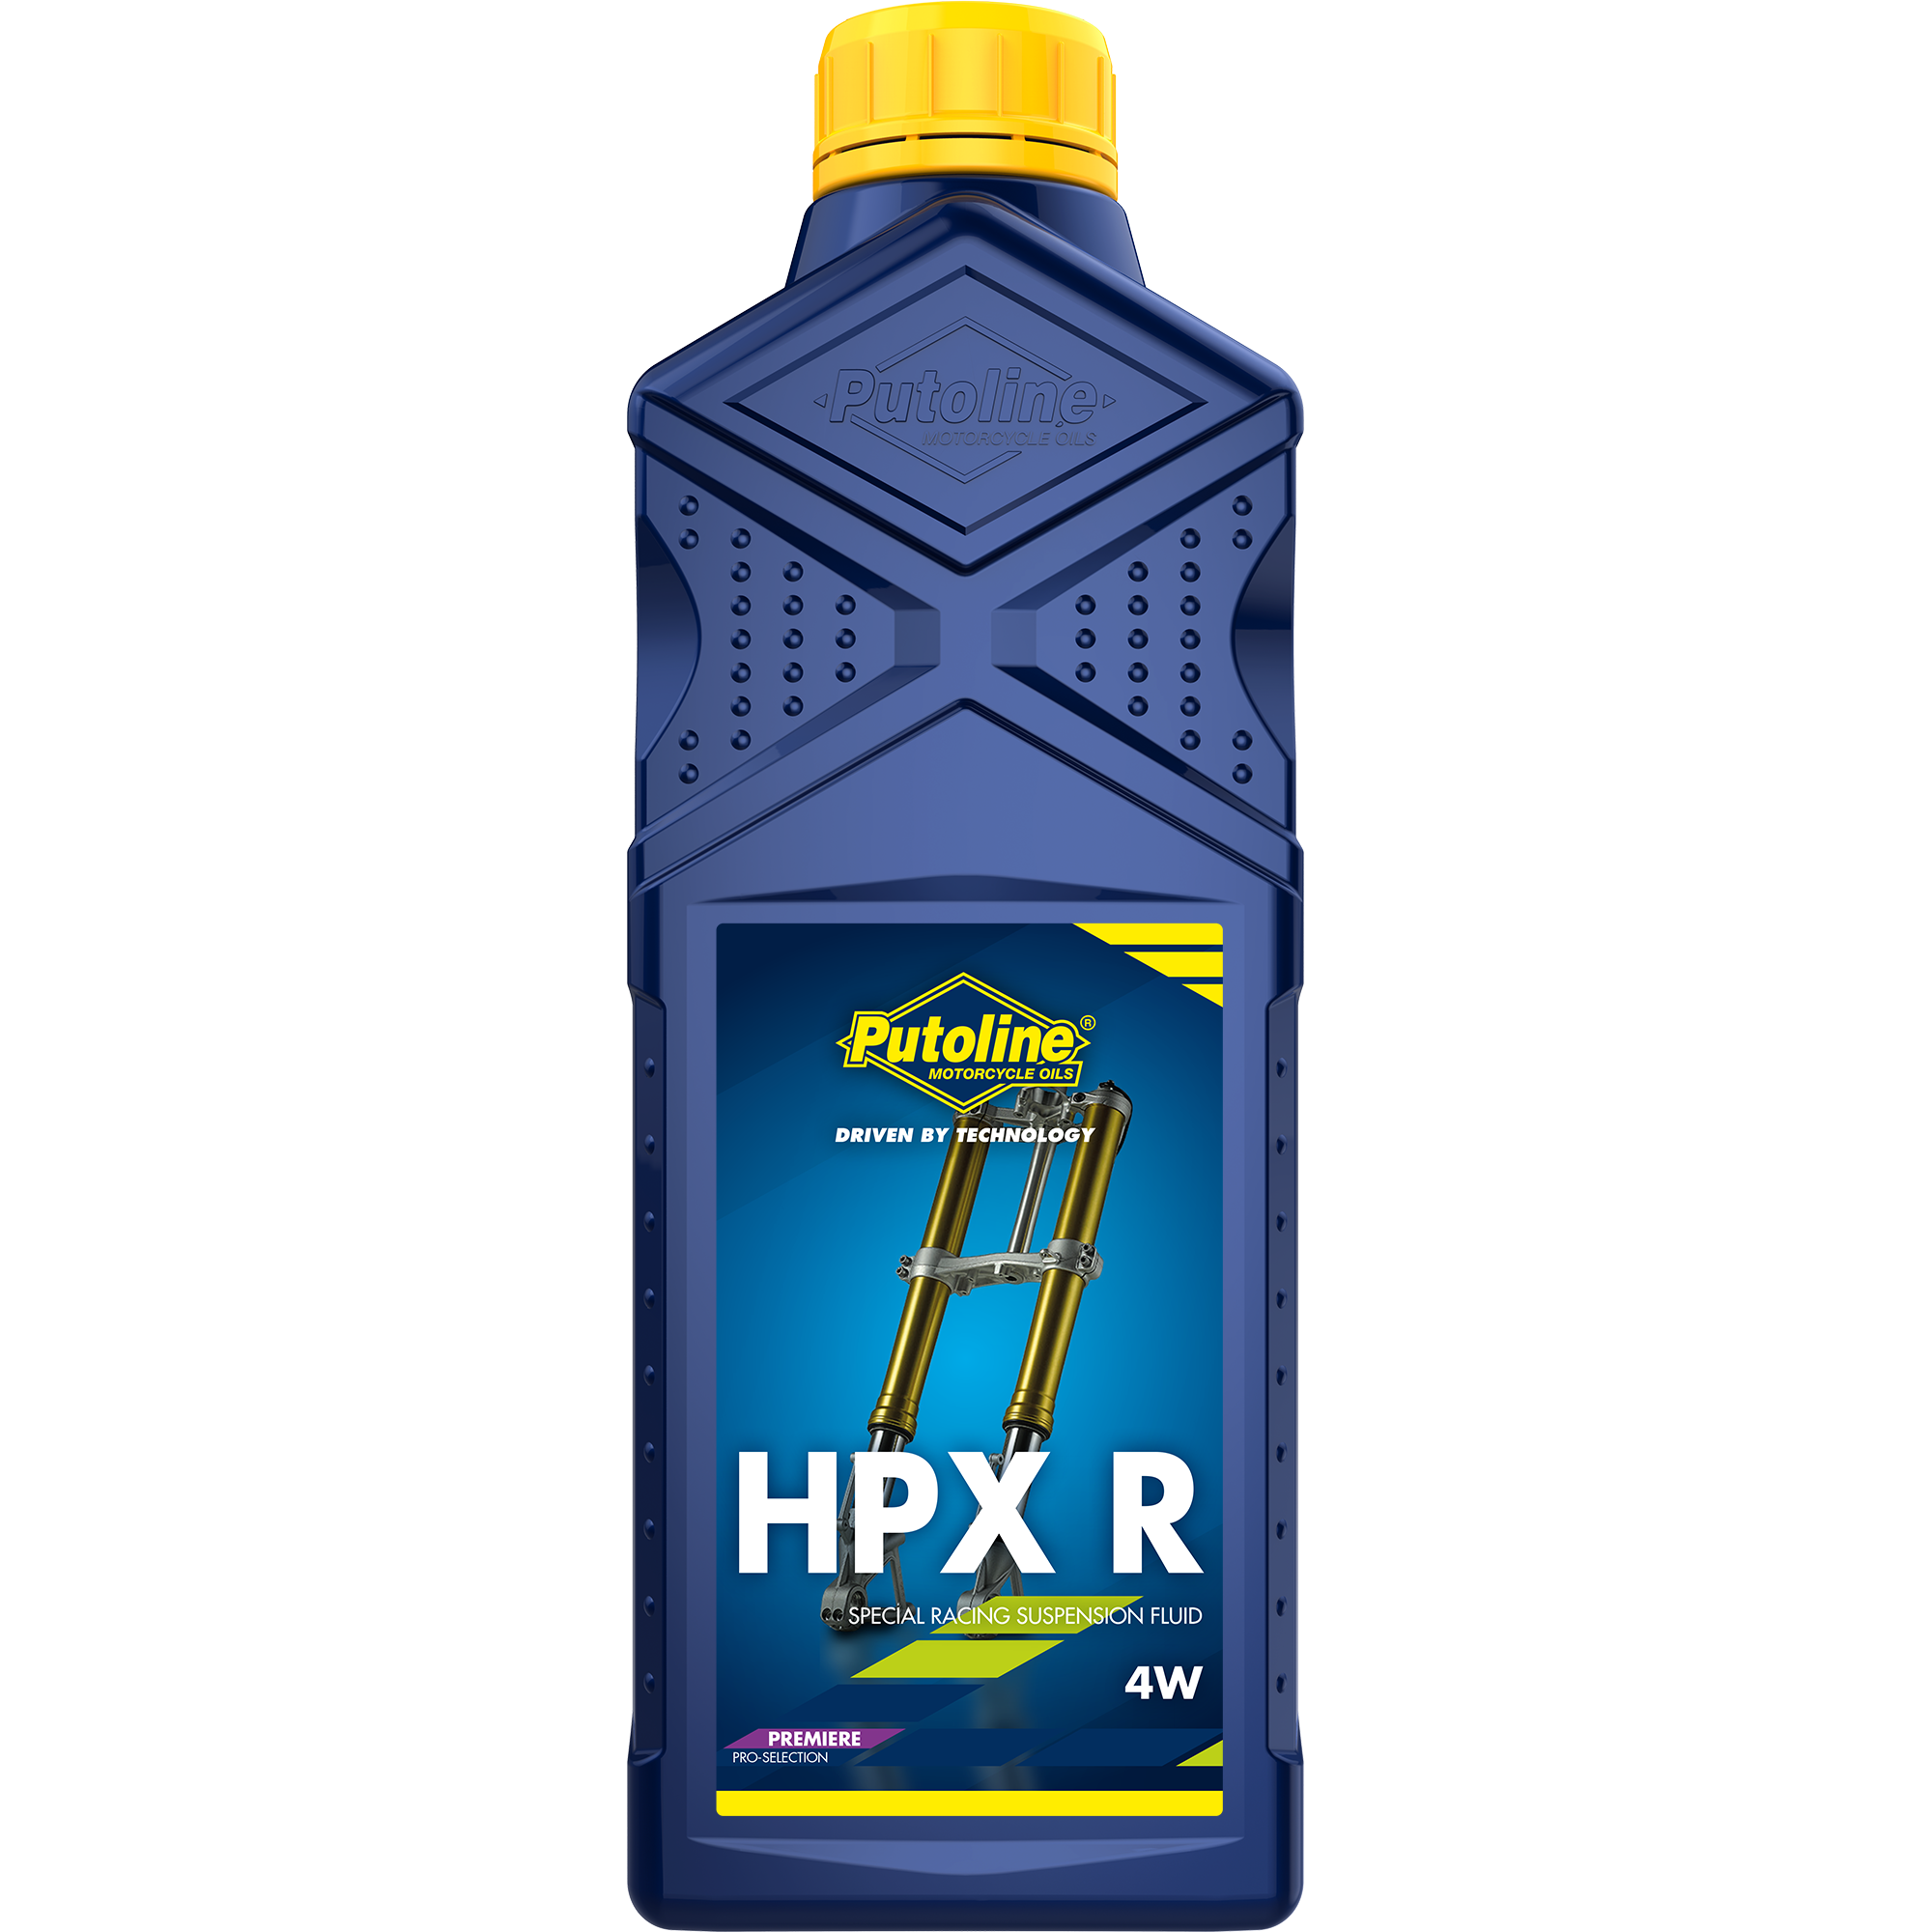 Putoline HPX R 4W, 1 lt